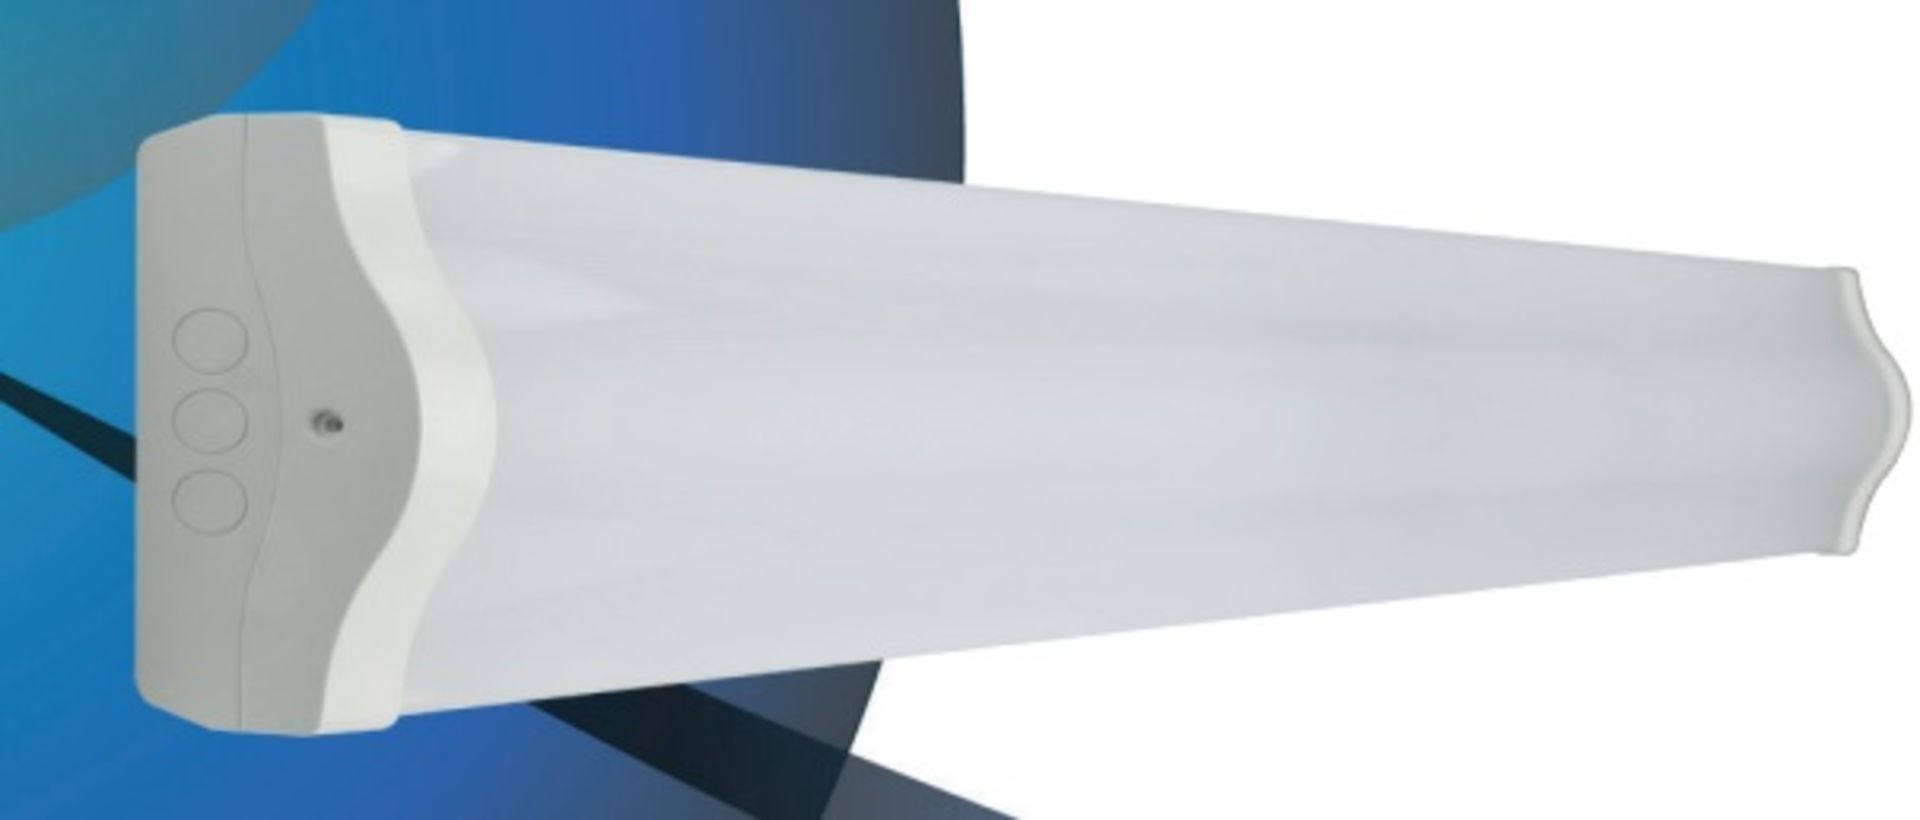 64 x Scholar Luminaire 4ft LED Lights | SCH30/840 | Total Cost £940